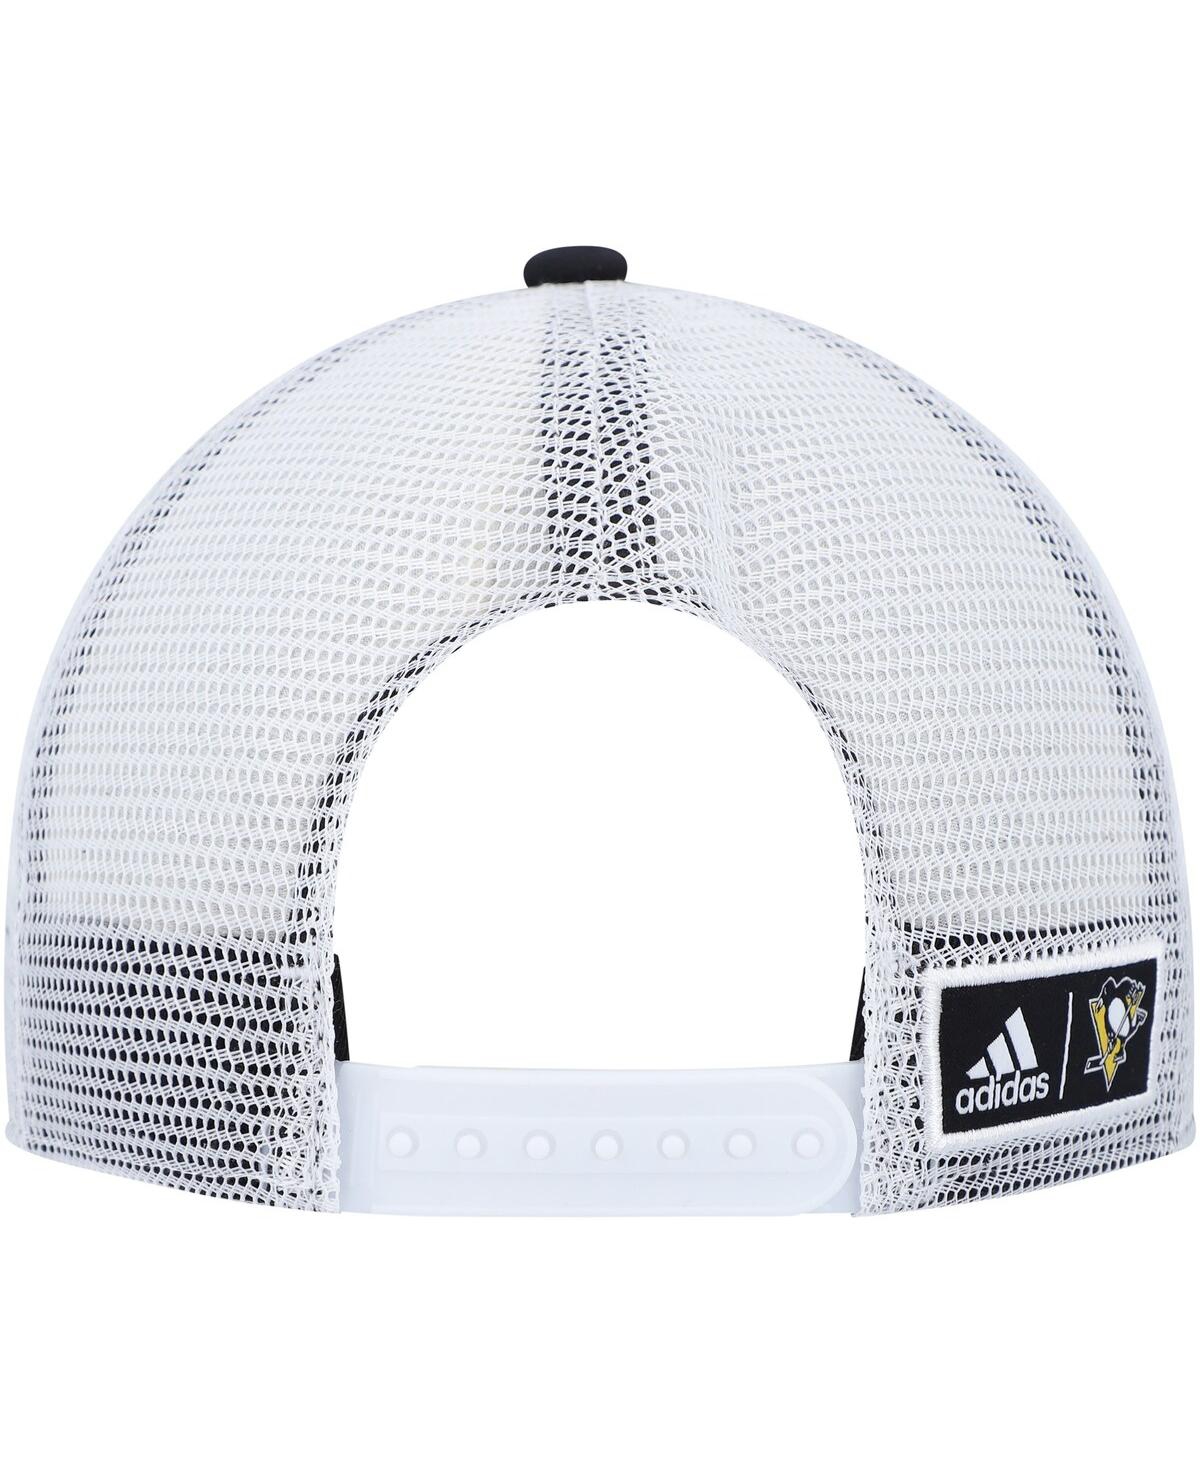 New Jersey Devils adidas Reverse Retro 2.0 Pom Cuffed Knit Hat - White